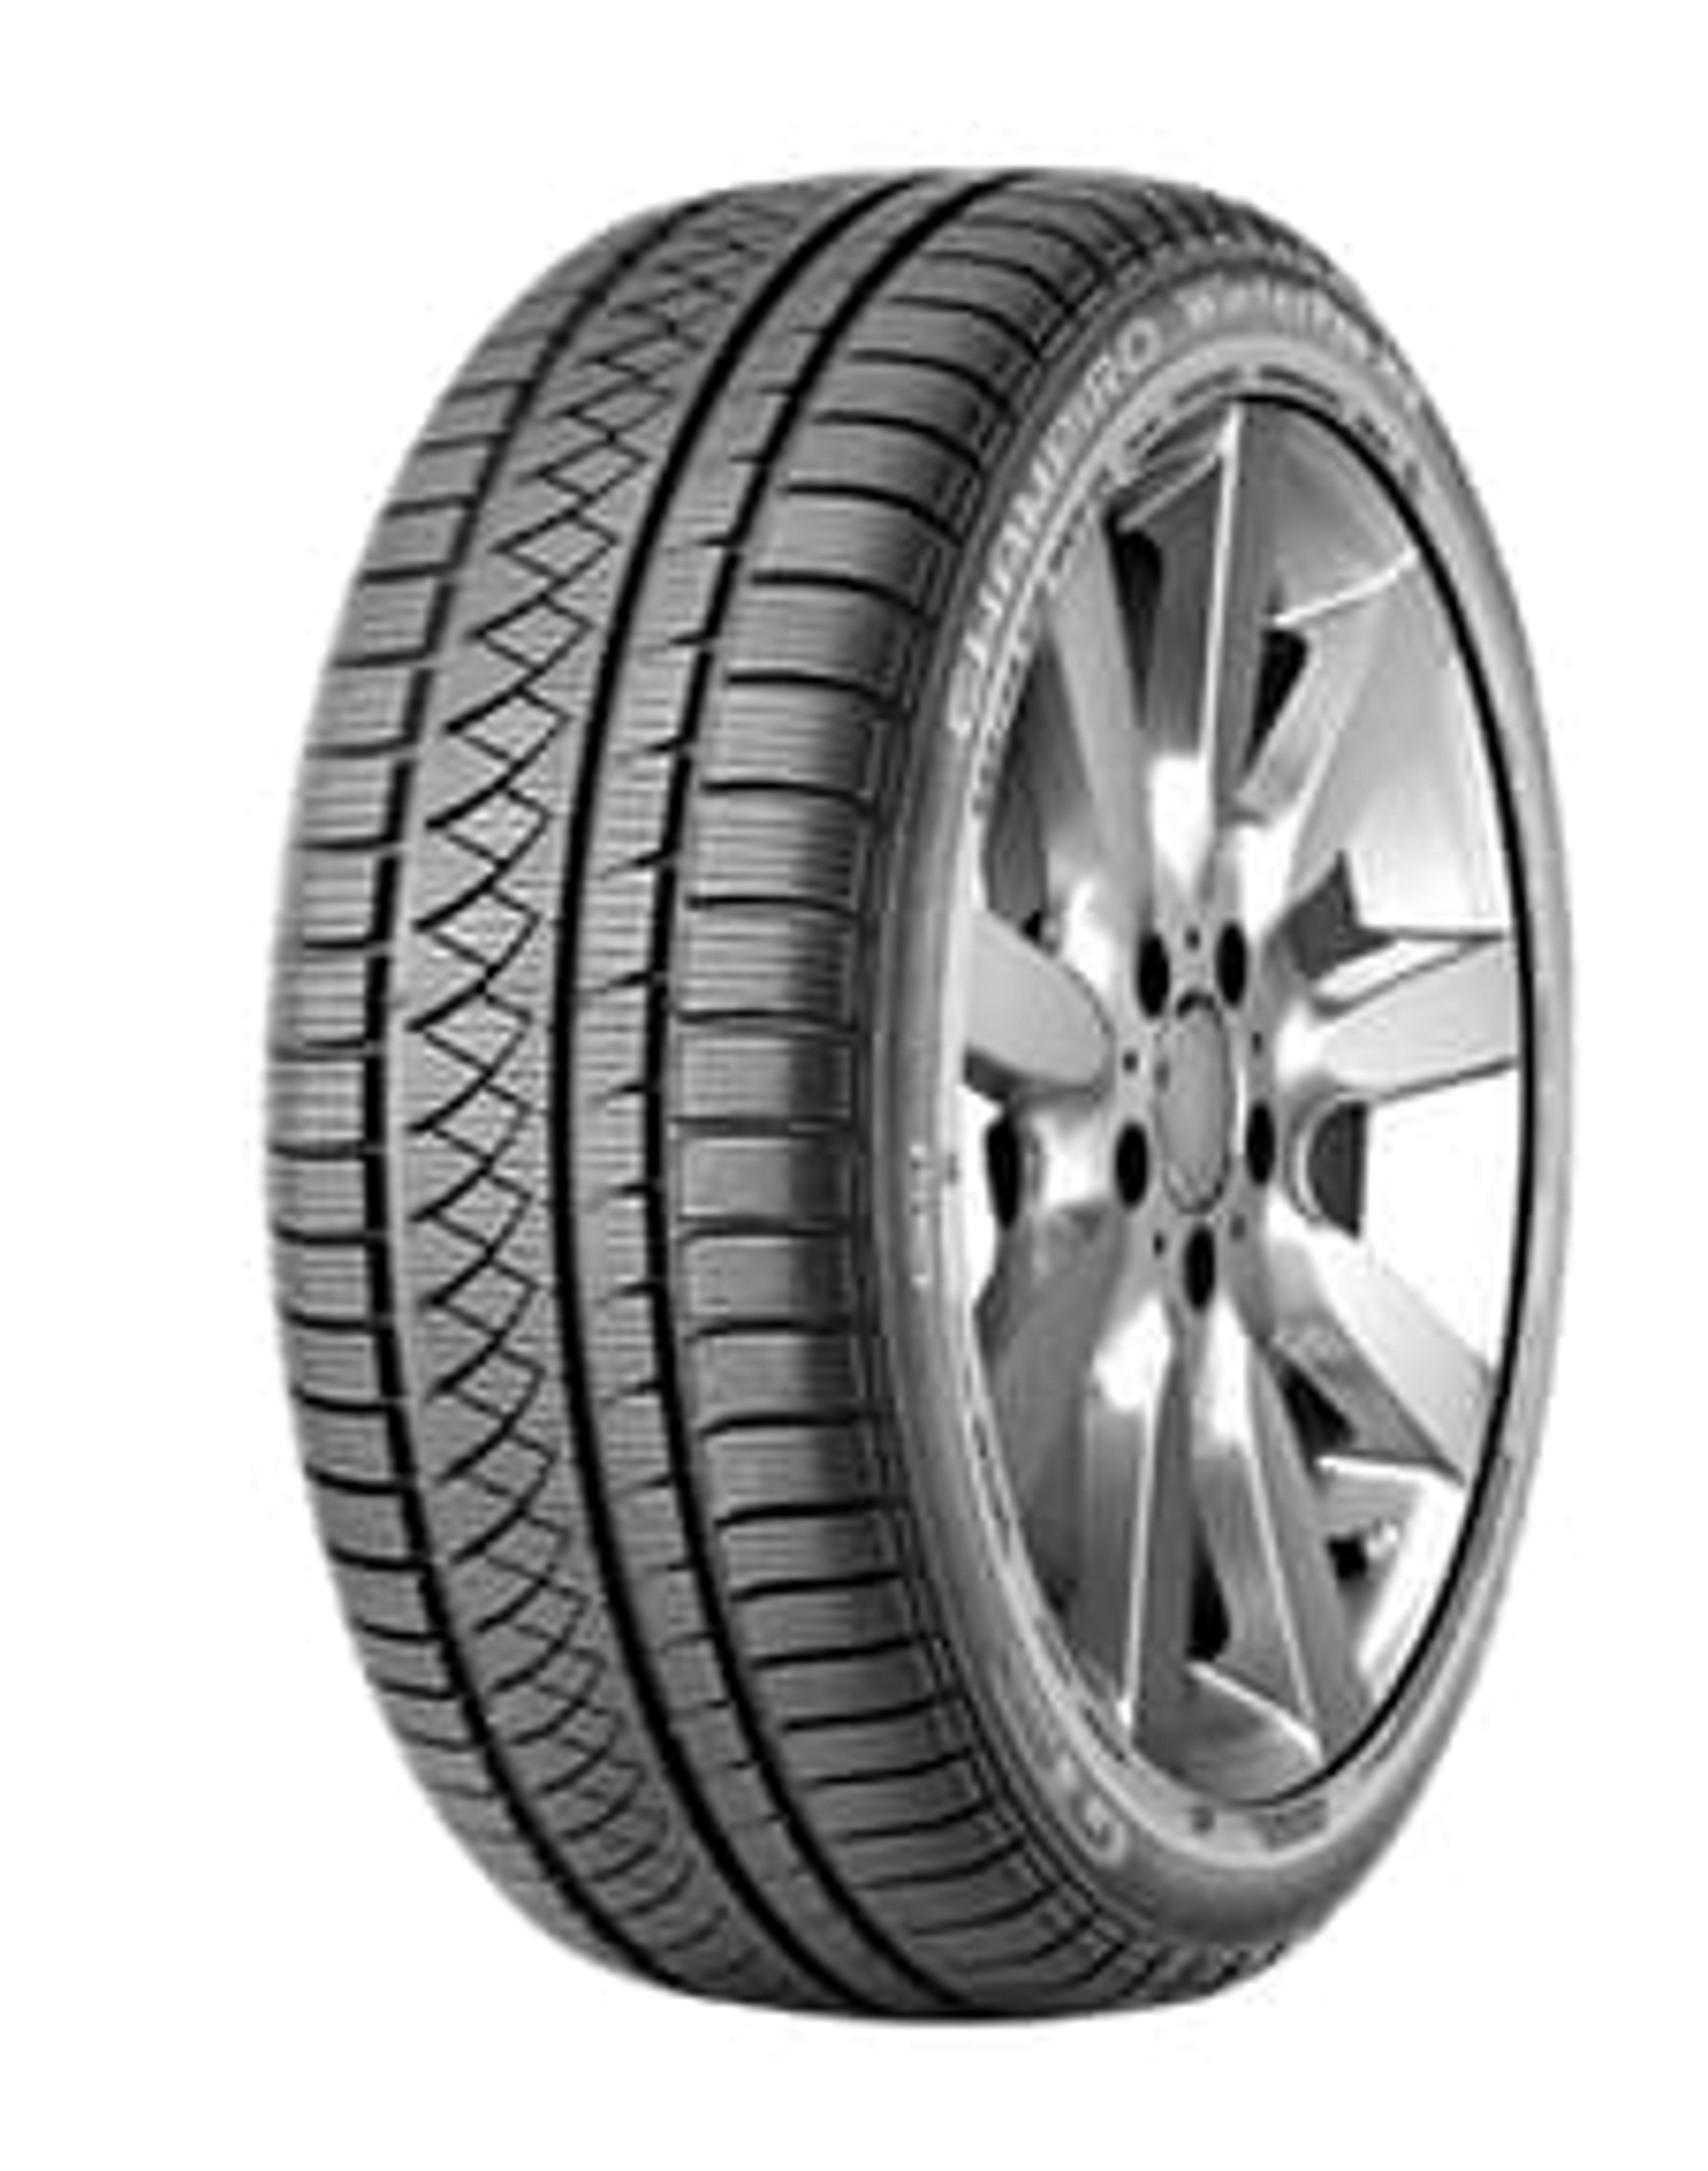 SimpleTire Buy Online GT | Radial HP Champiro Winterpro Tires